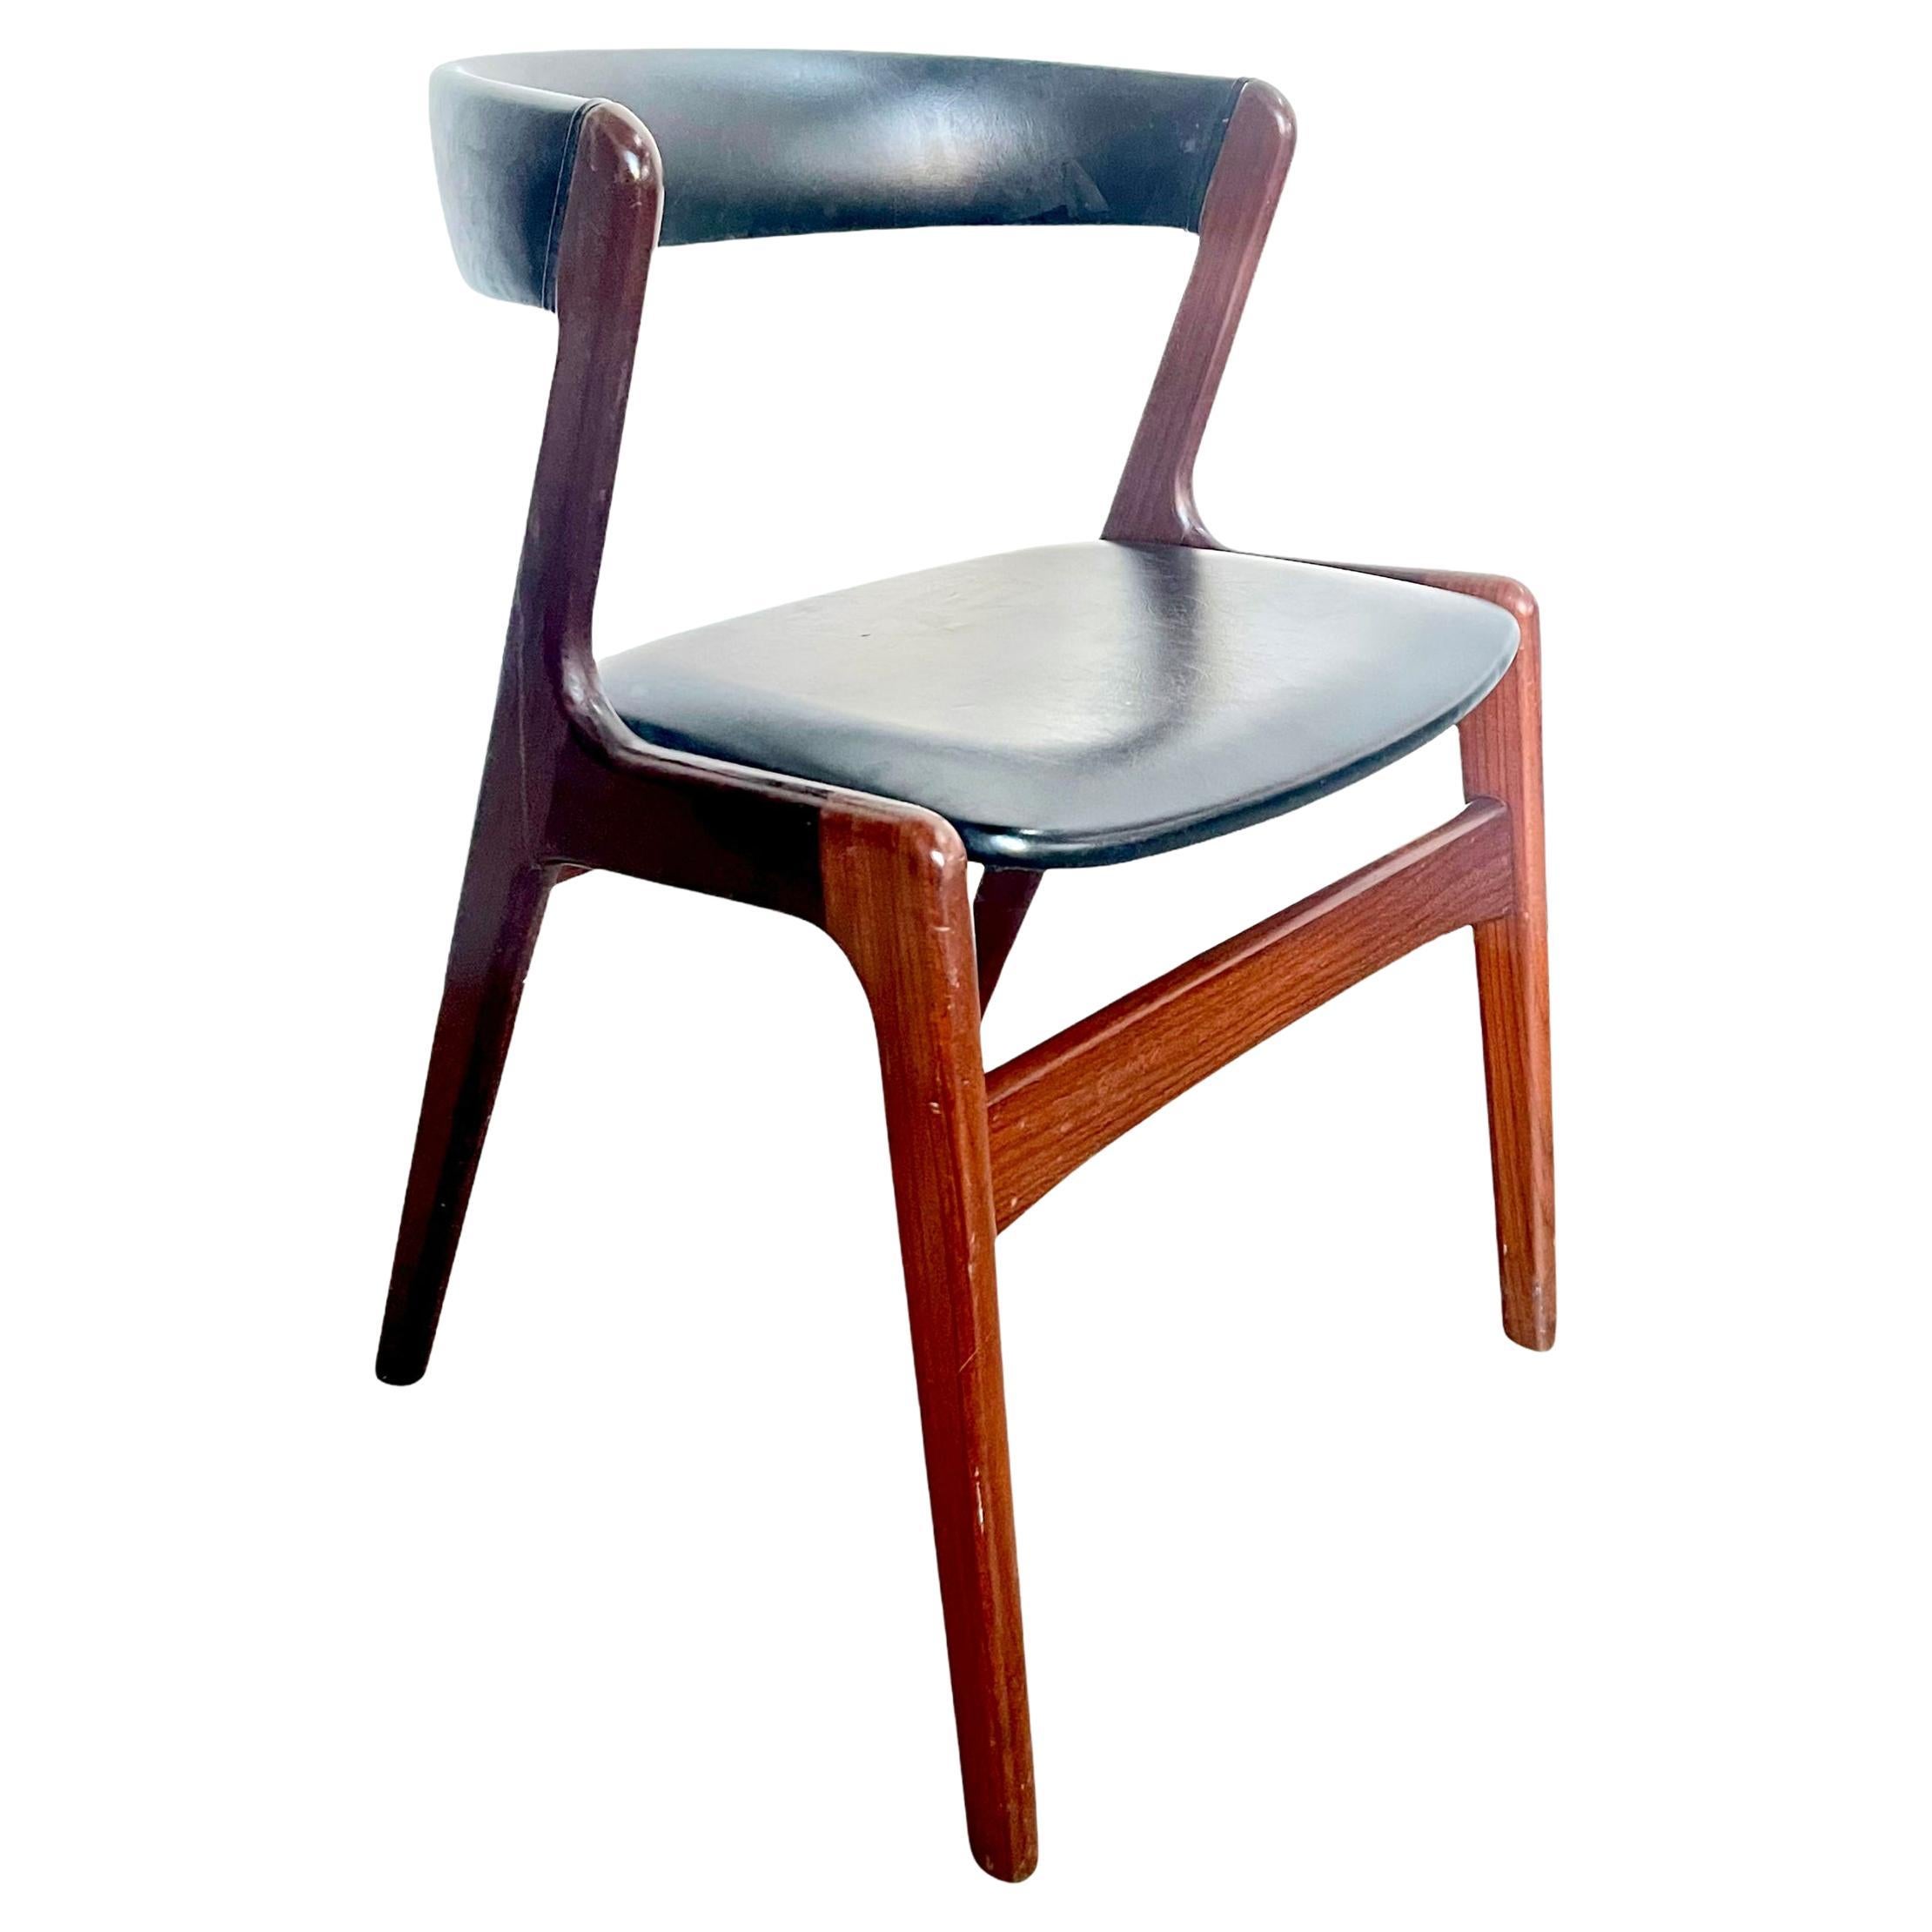 Model 31 Chair